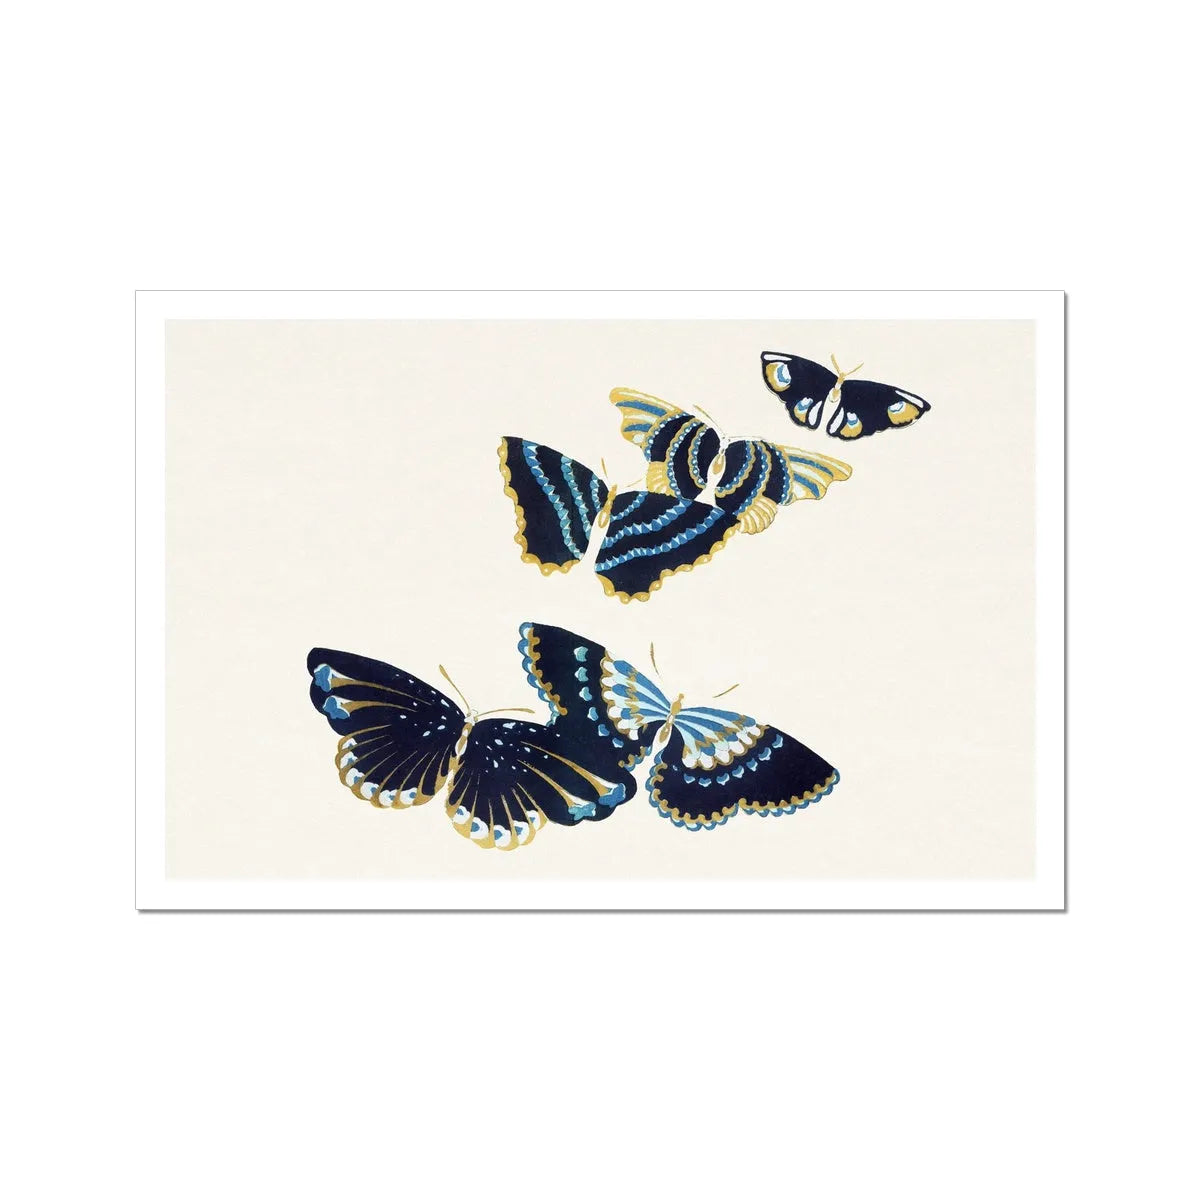 Japanese Blue Butterflies Too - Kamisaka Sekka Art Print - 24’x16’ - Posters Prints & Visual Artwork - Aesthetic Art